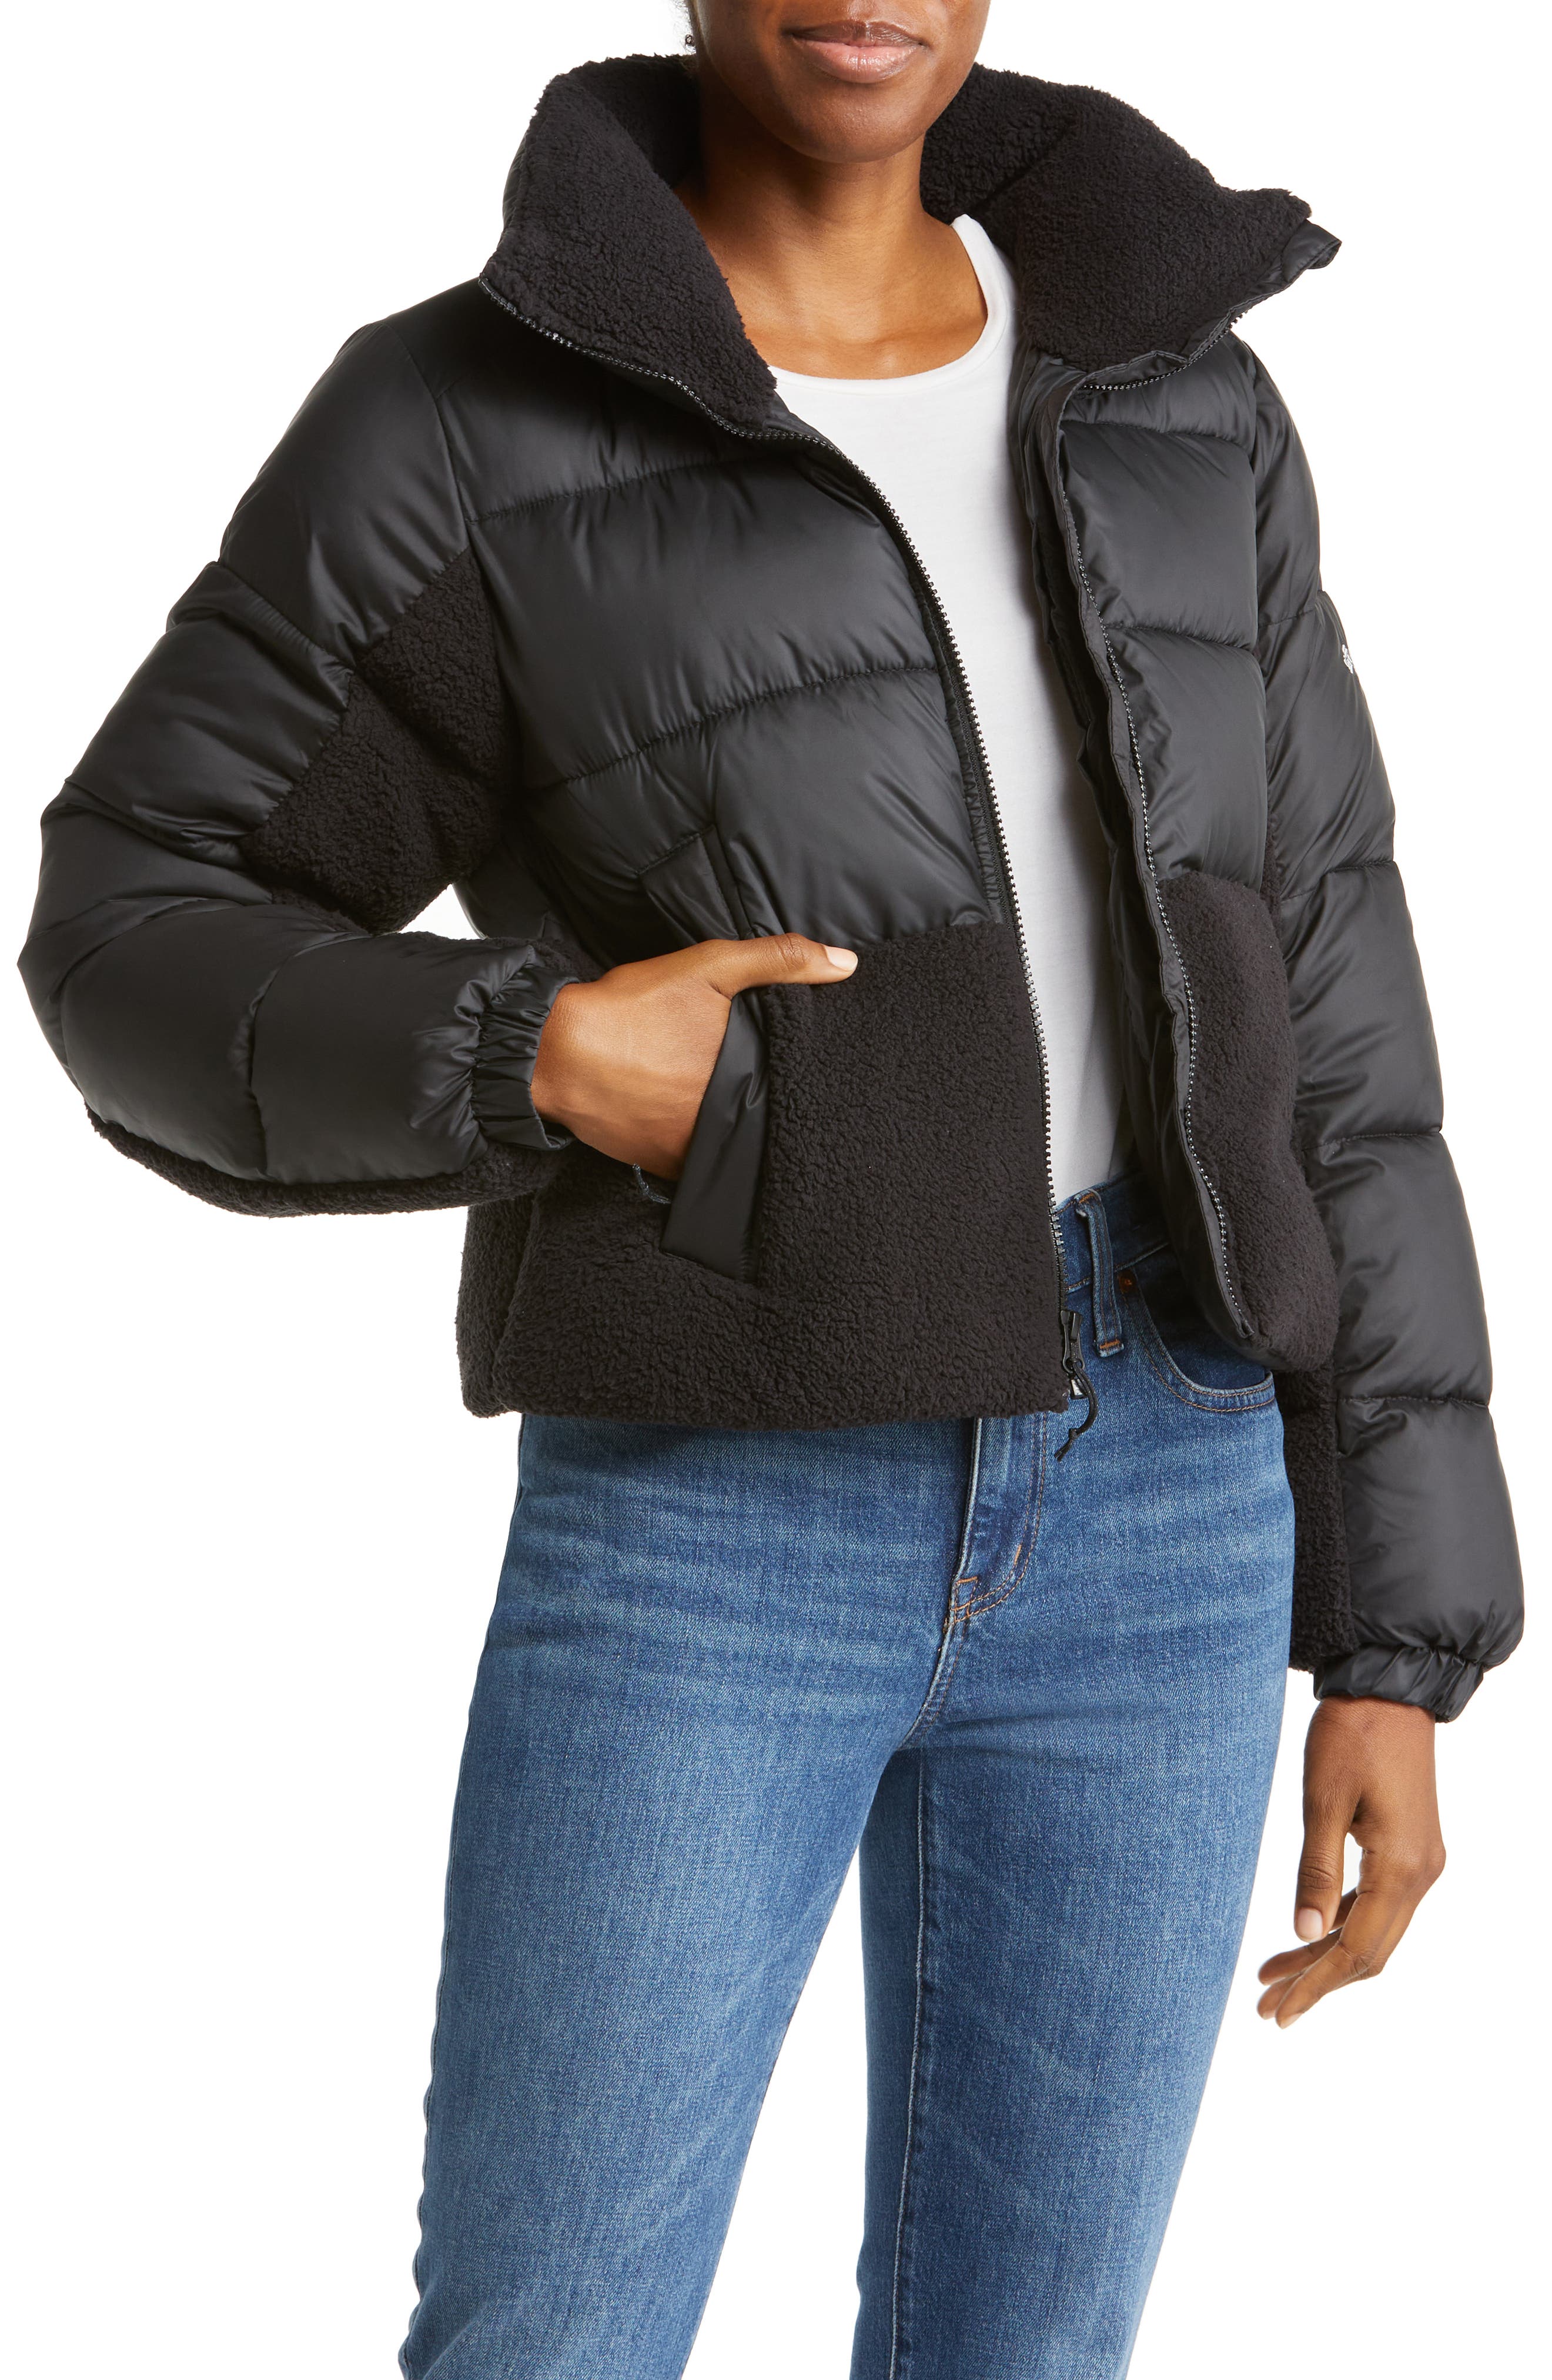 discount 88% Columbia waterproof jacket KIDS FASHION Jackets Fleece Gray/Orange 14Y 